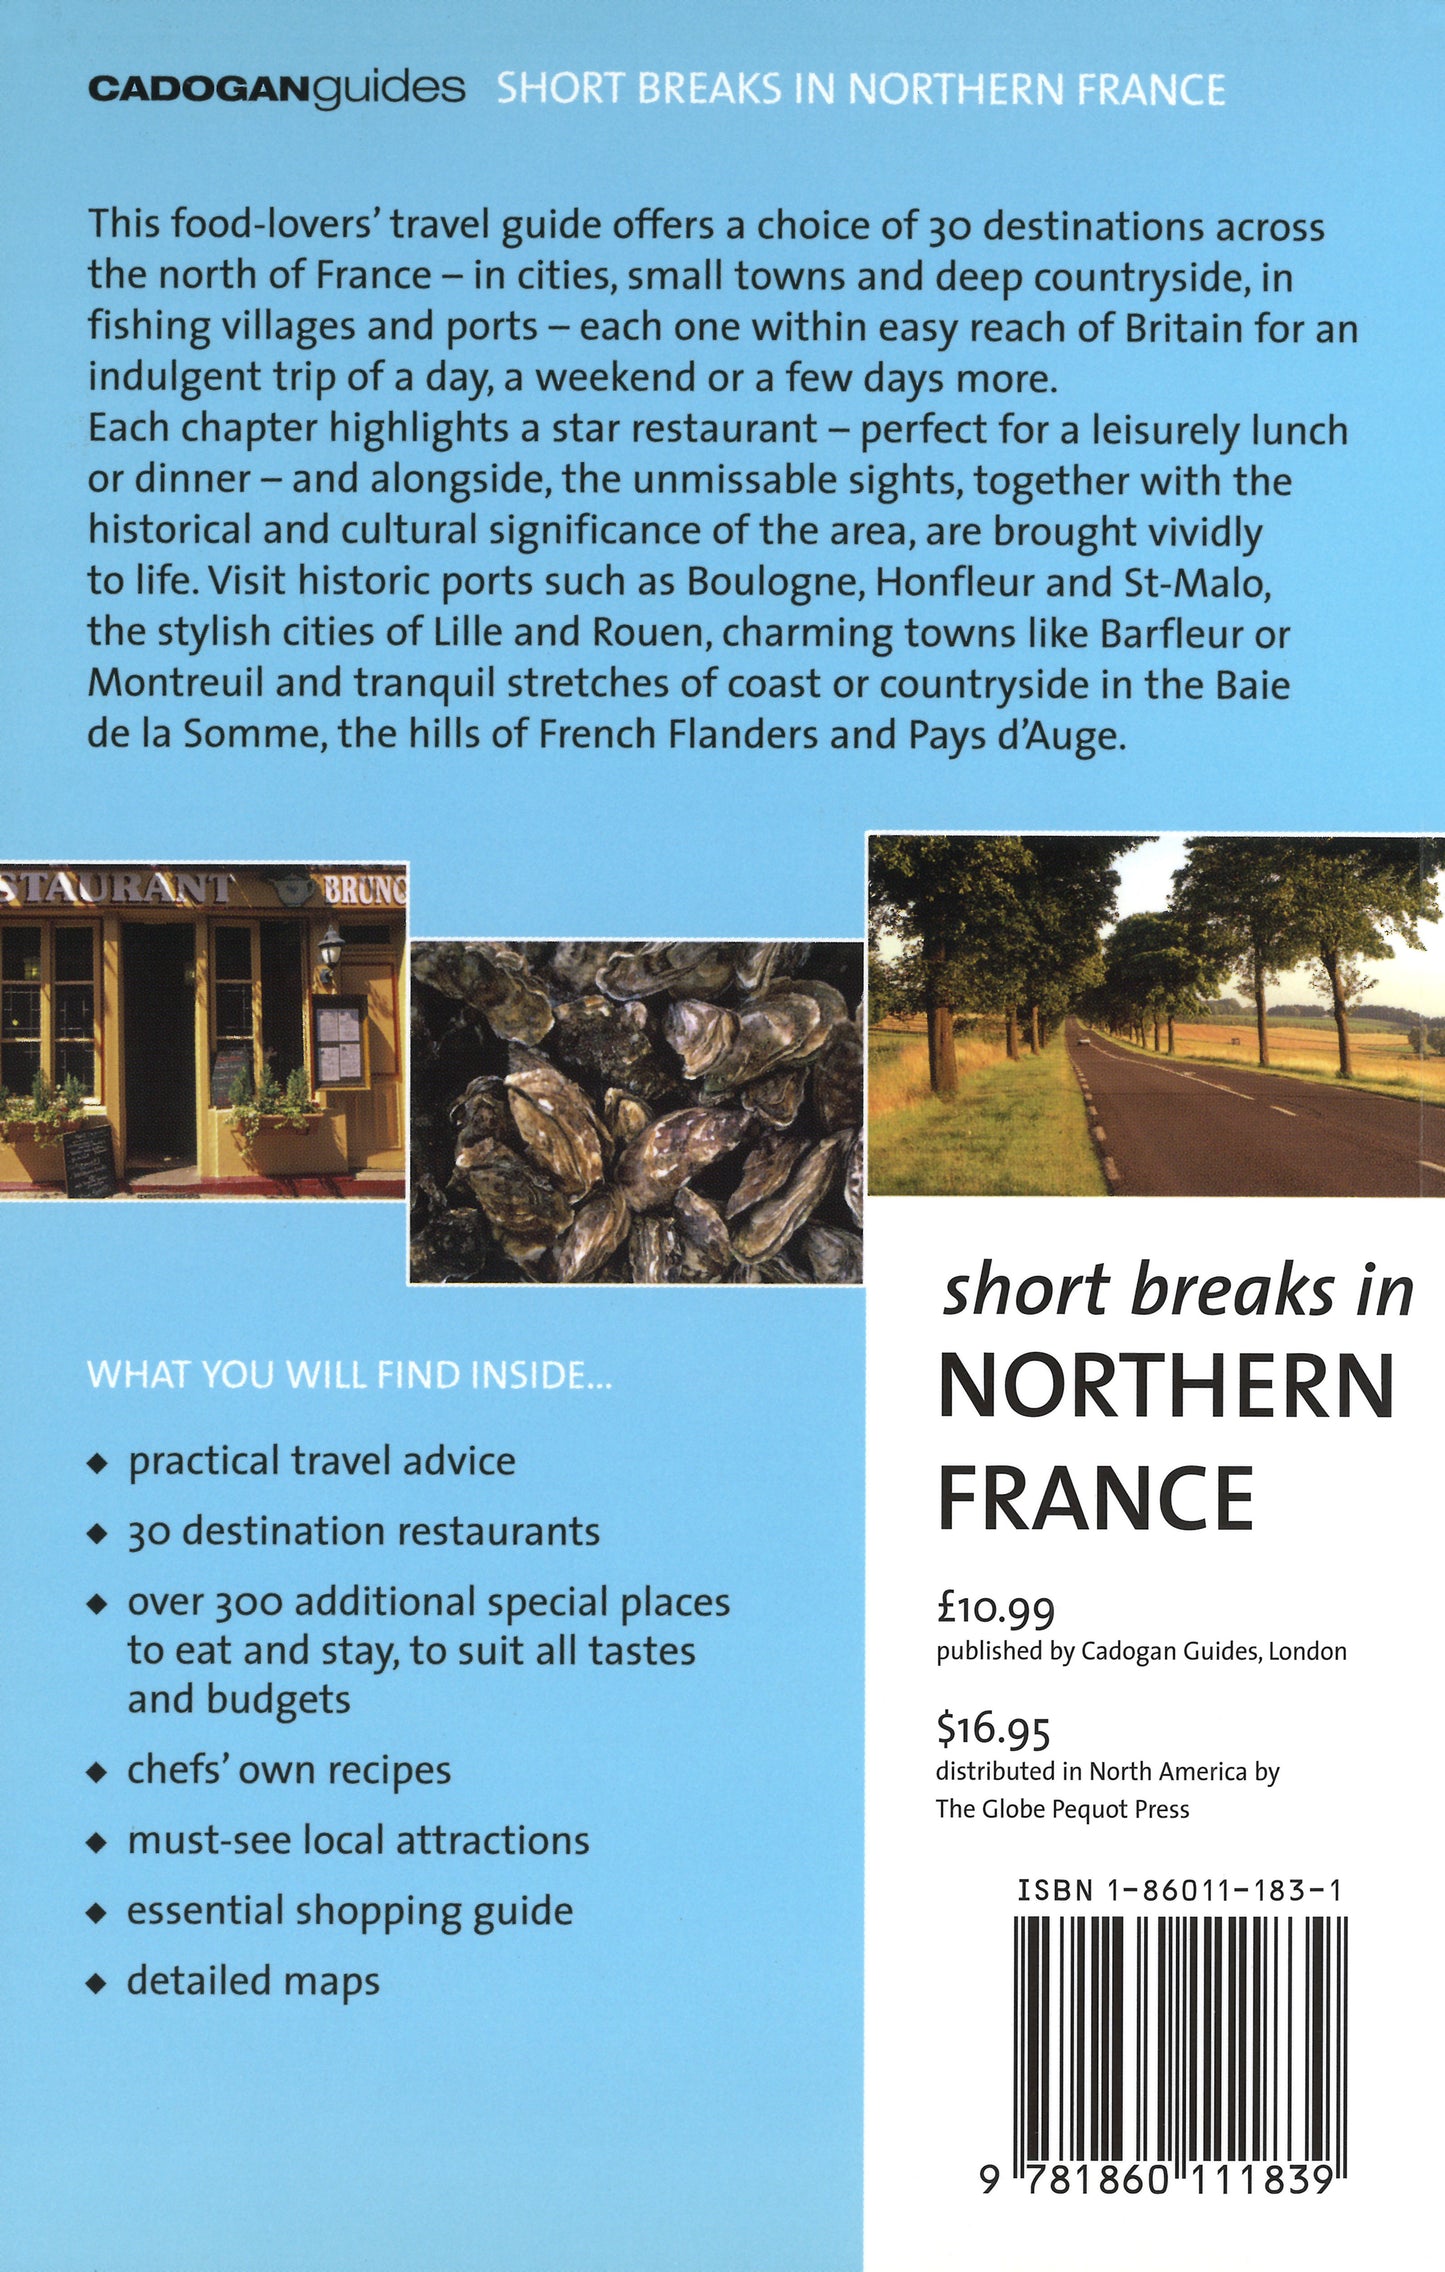 Short Breaks in Northern France